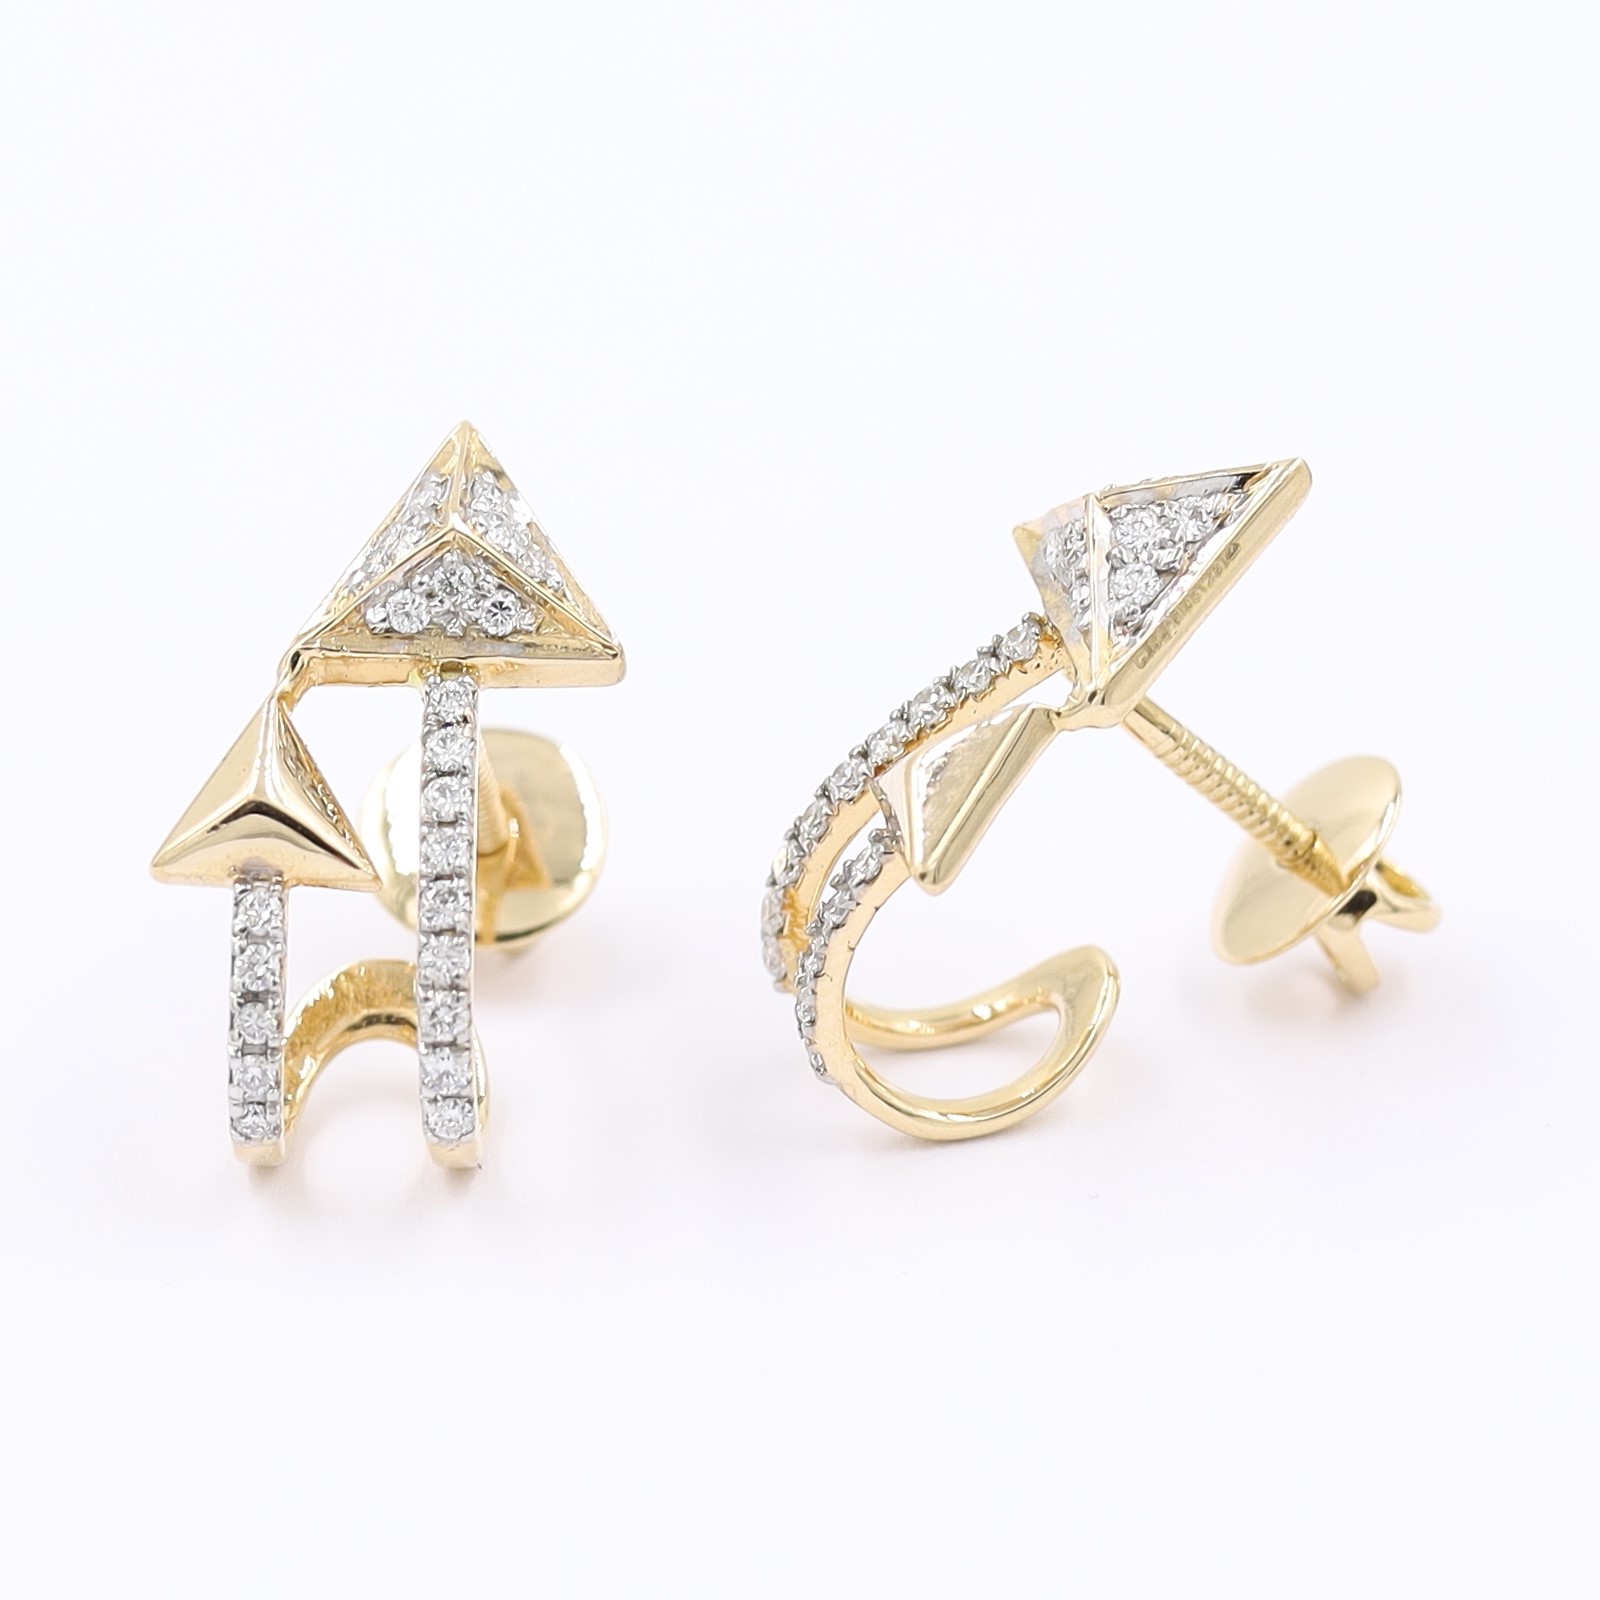 Surreal Rose Gold Diamond Earrings